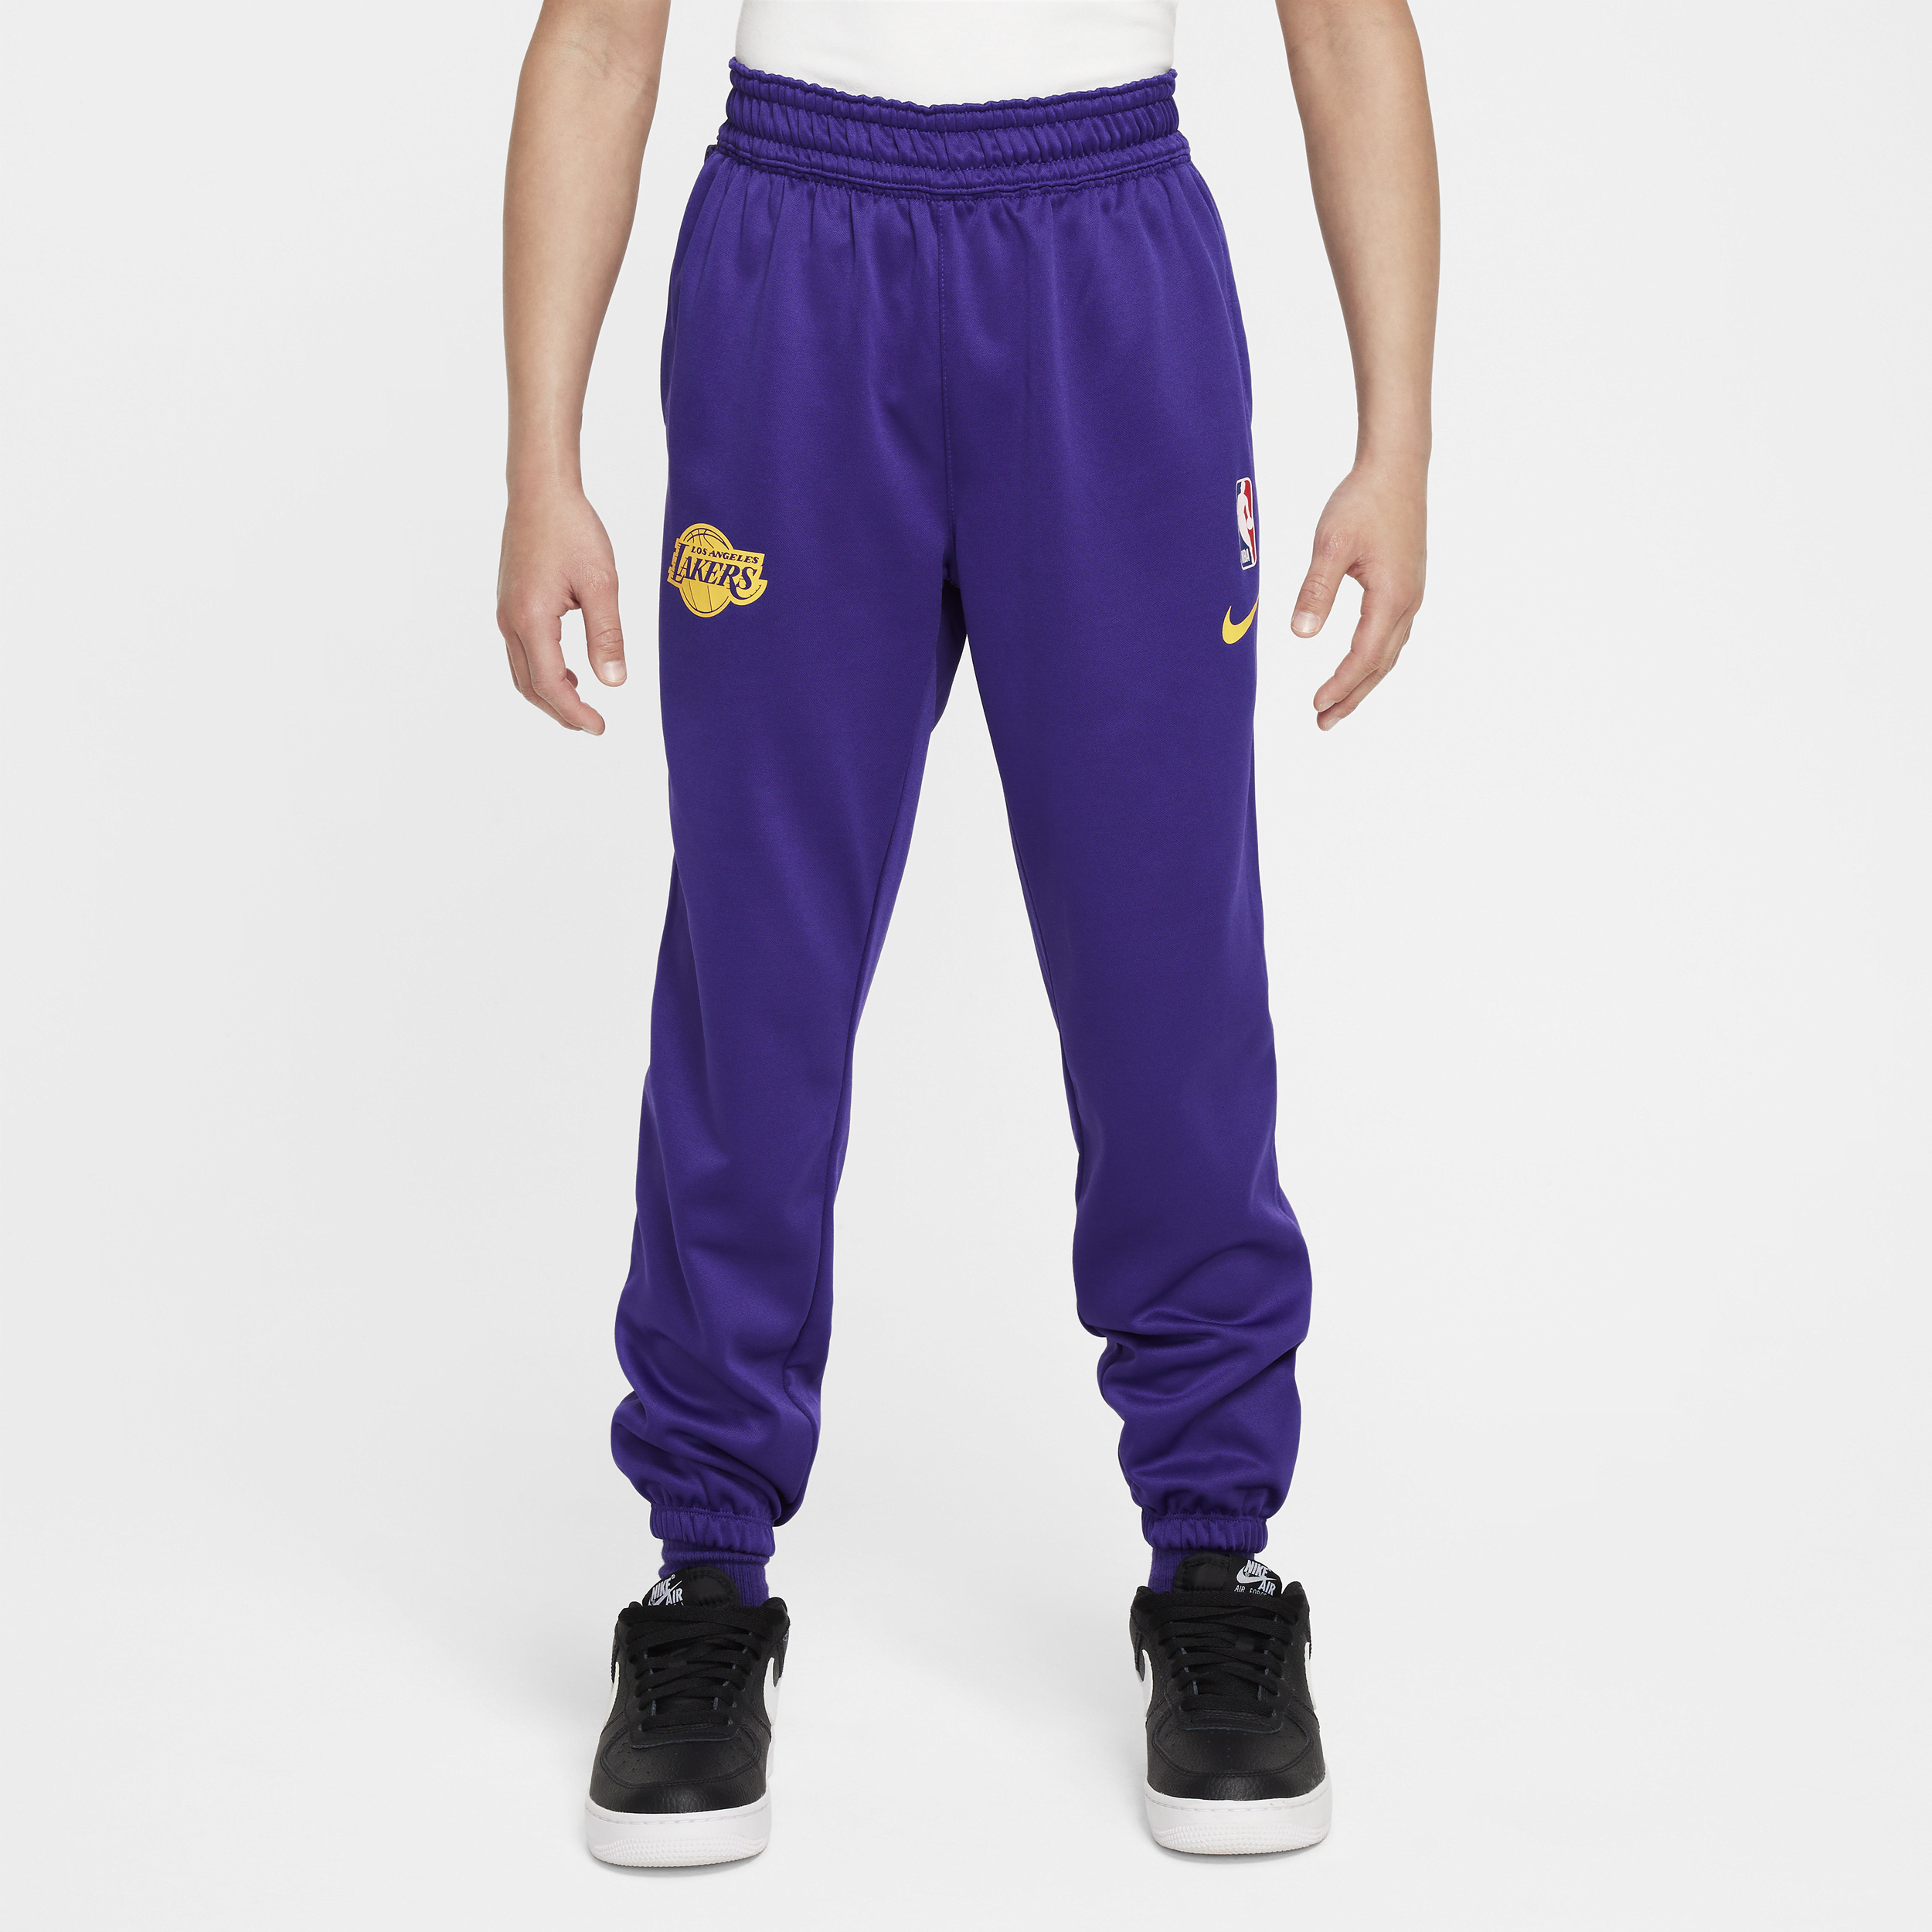 Pantaloni Los Angeles Lakers Spotlight Nike Dri-FIT NBA – Ragazzo/a - Viola